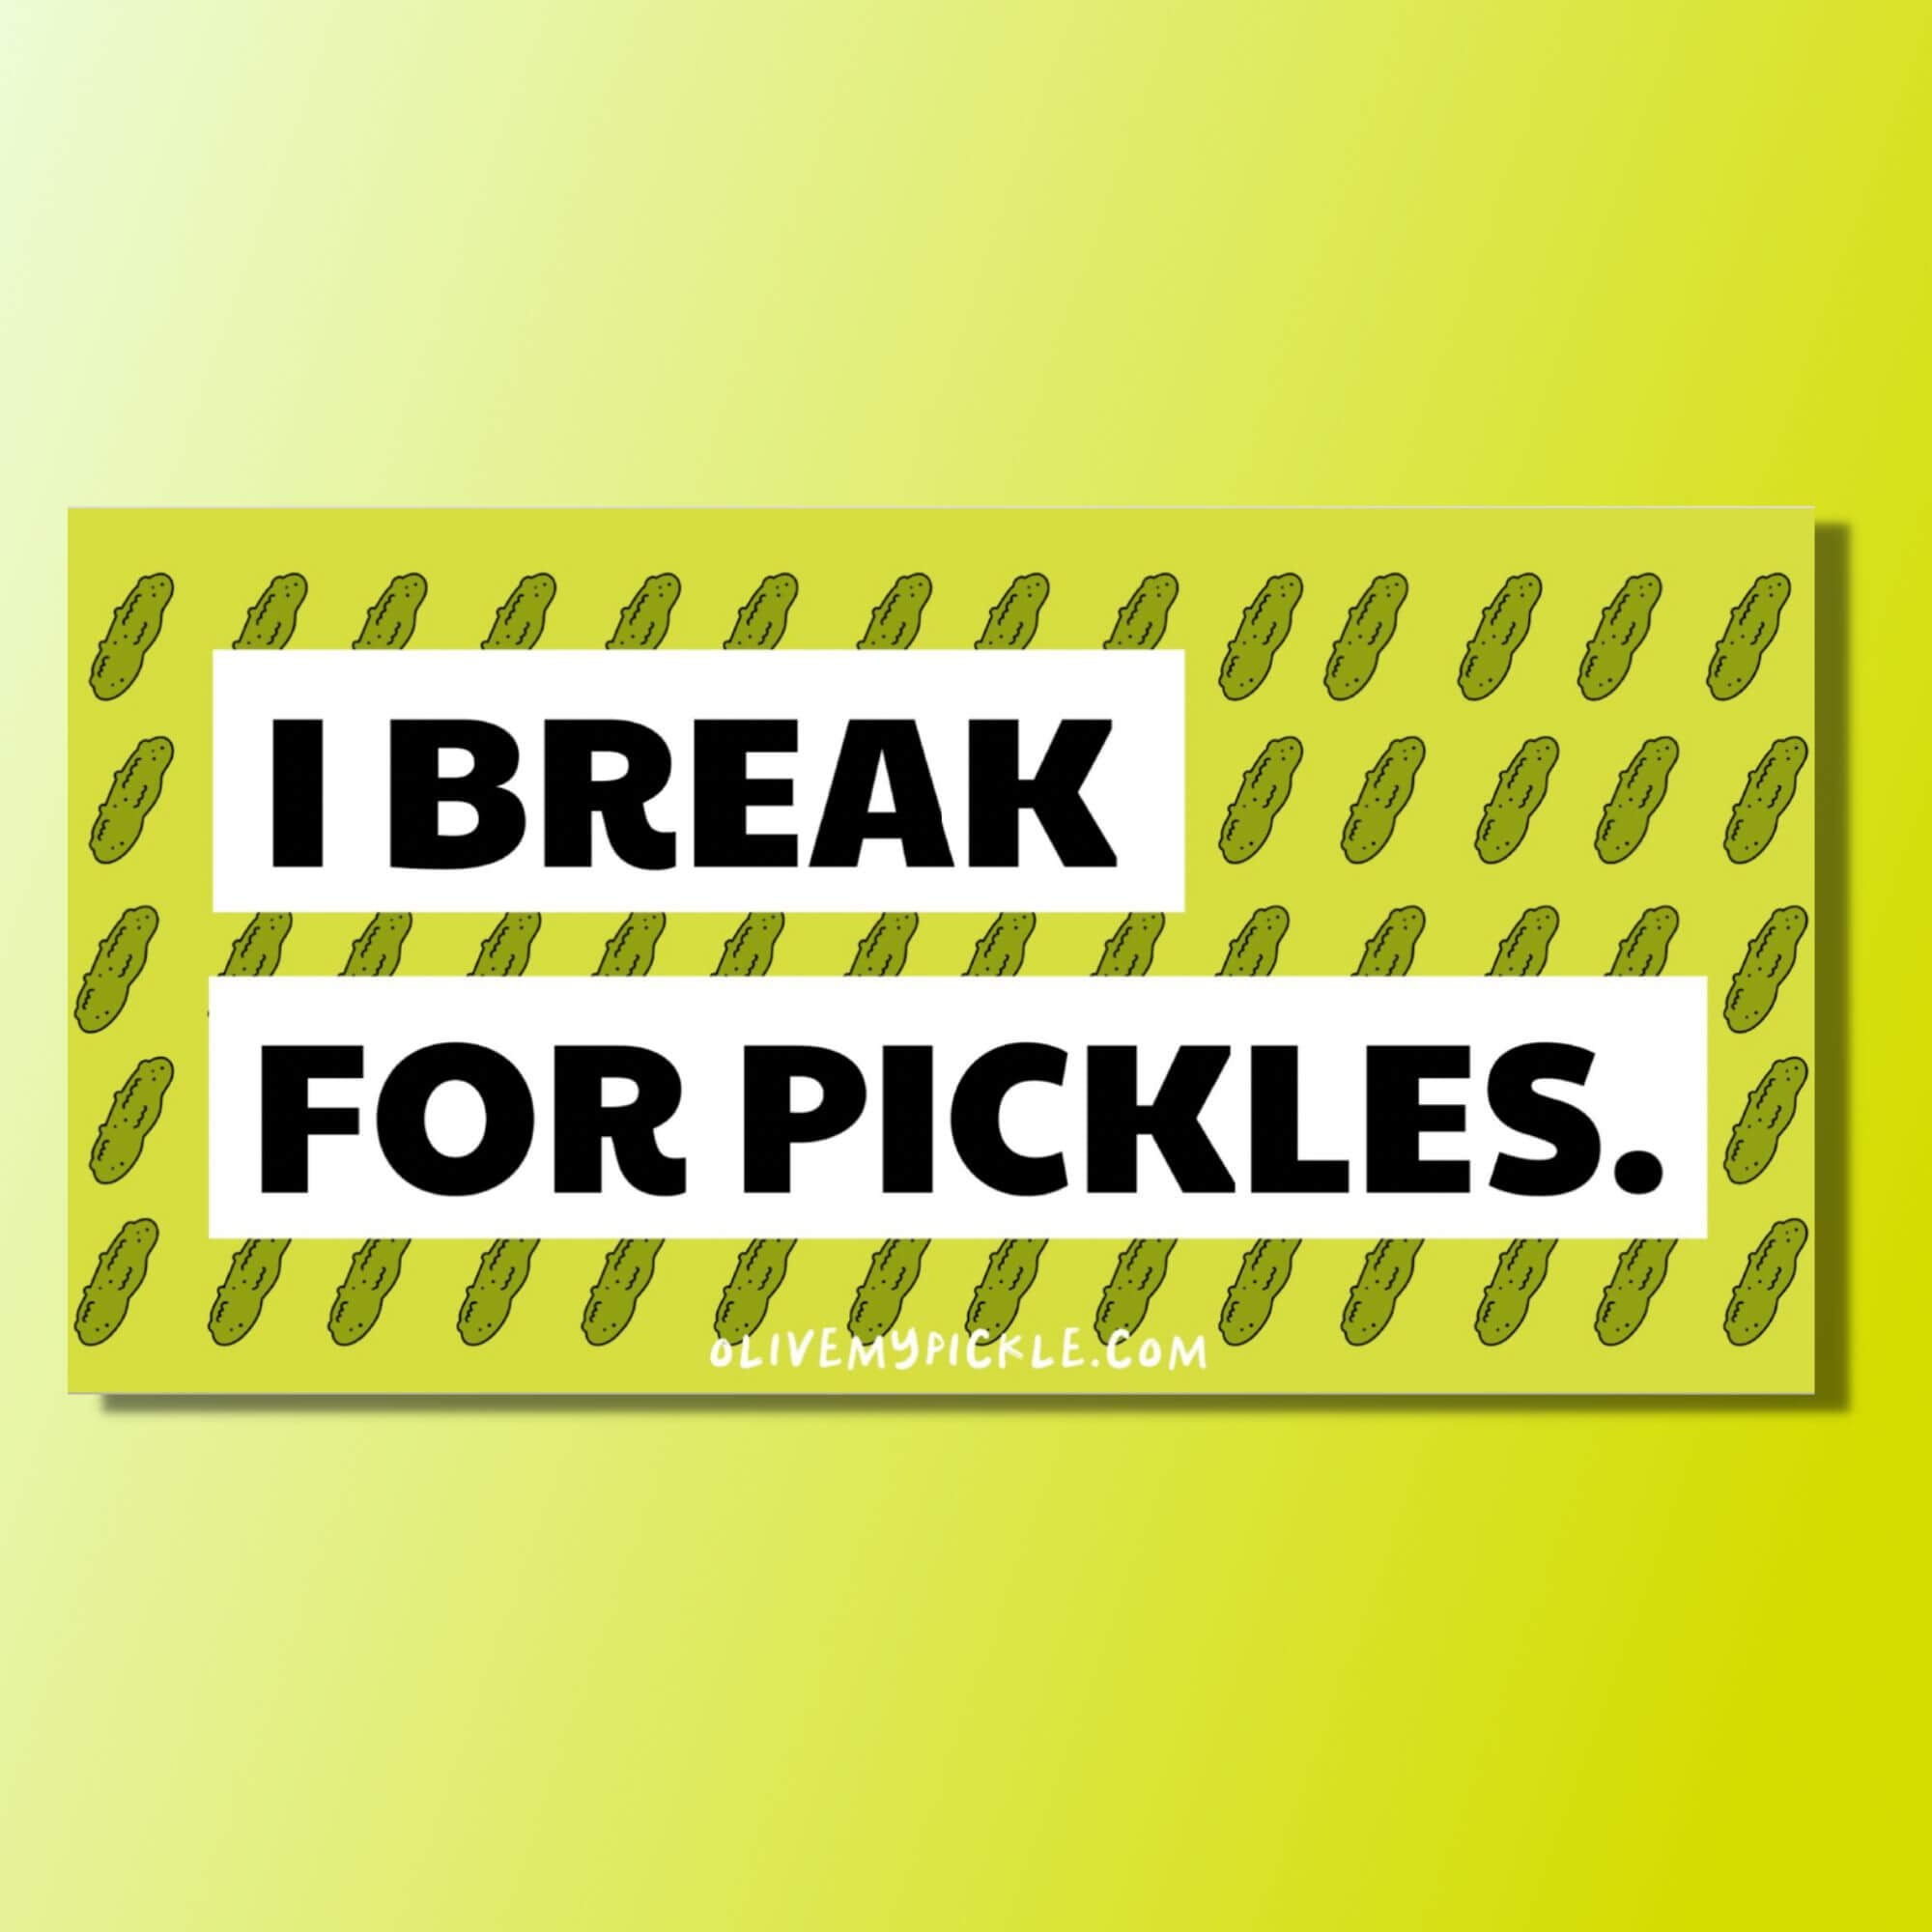 I break for pickles Bumper Sticker